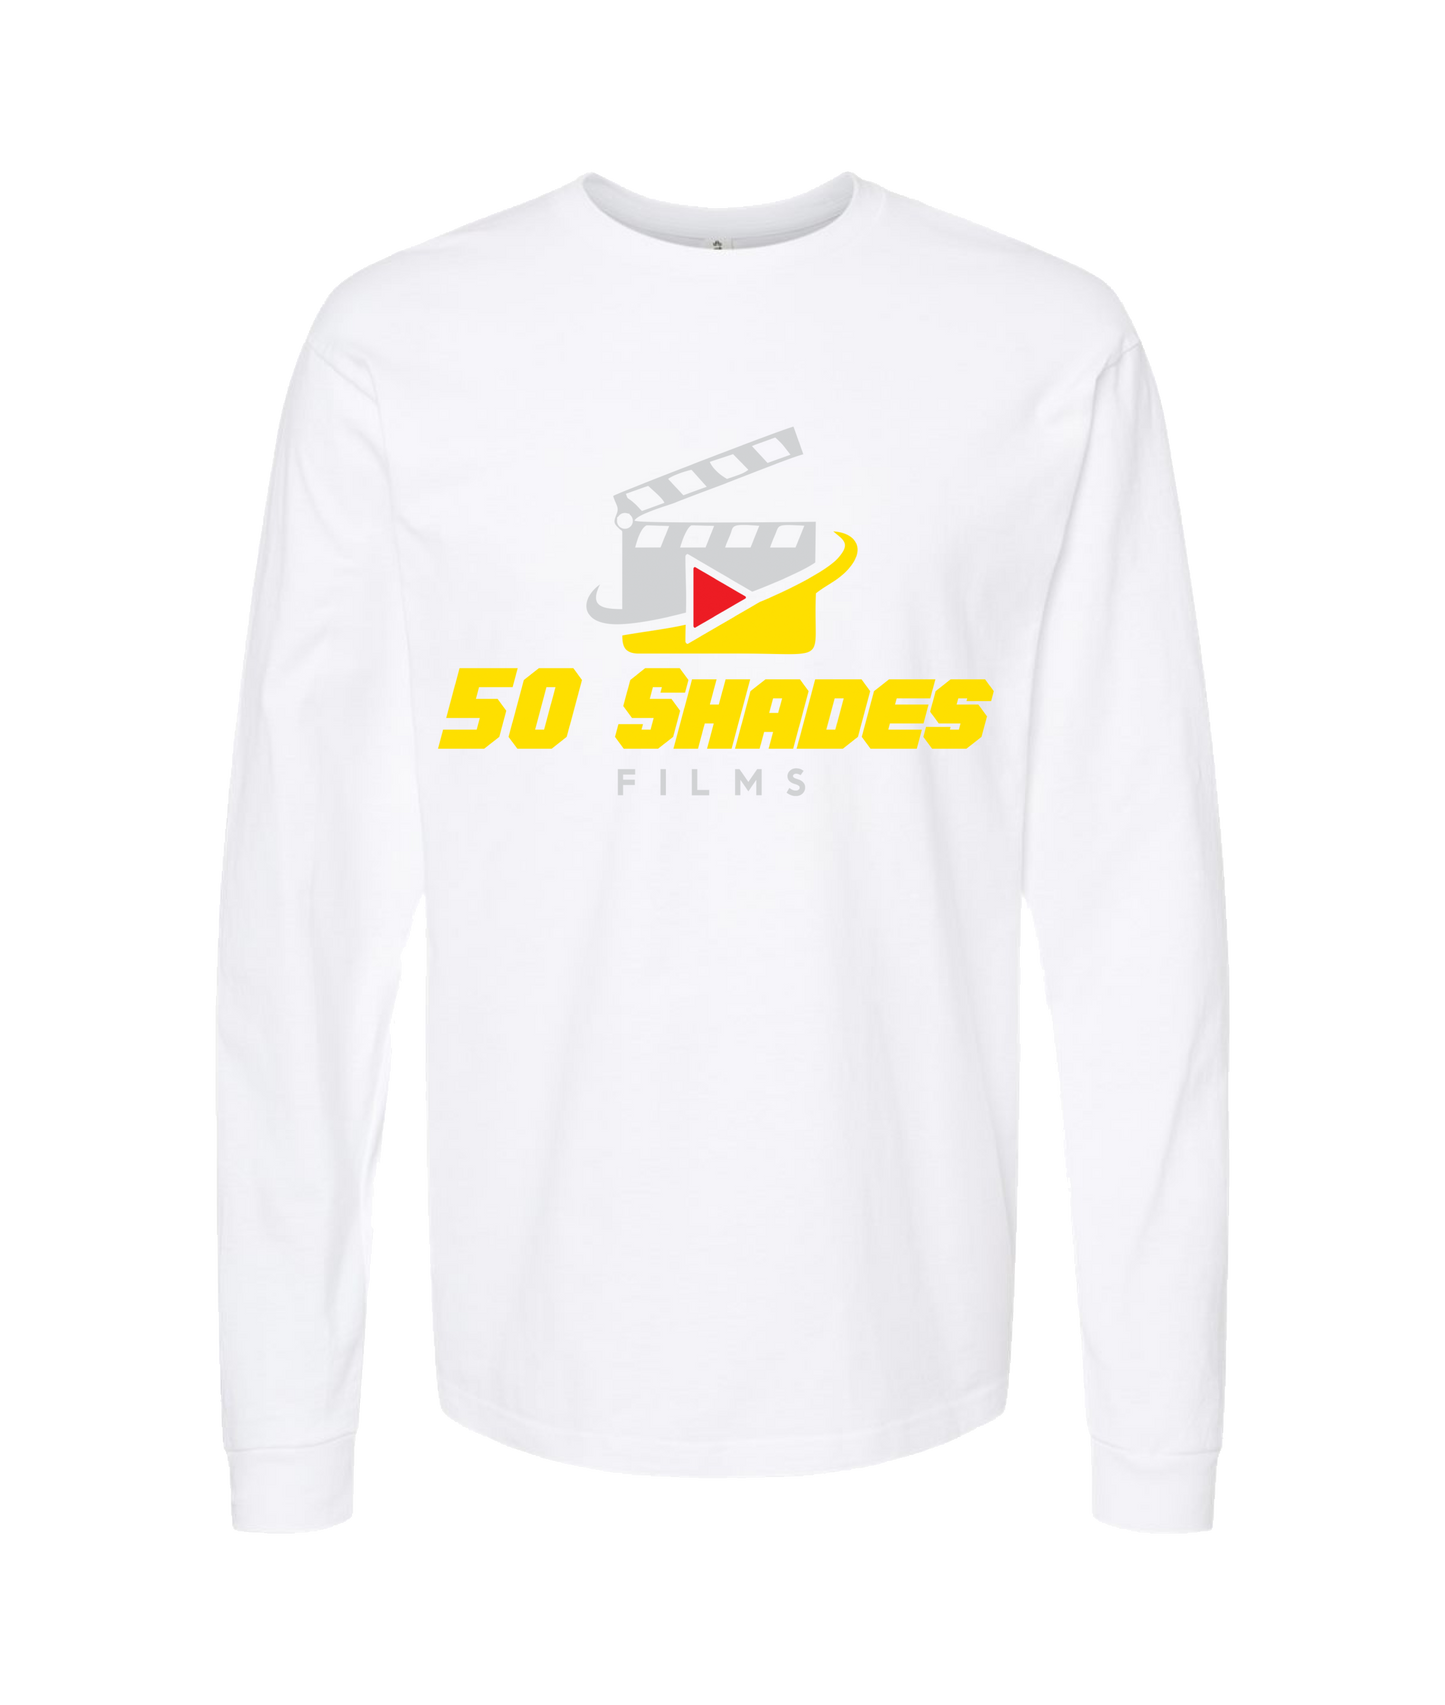 50 Shades Films - LOGO 1 - White Long Sleeve T